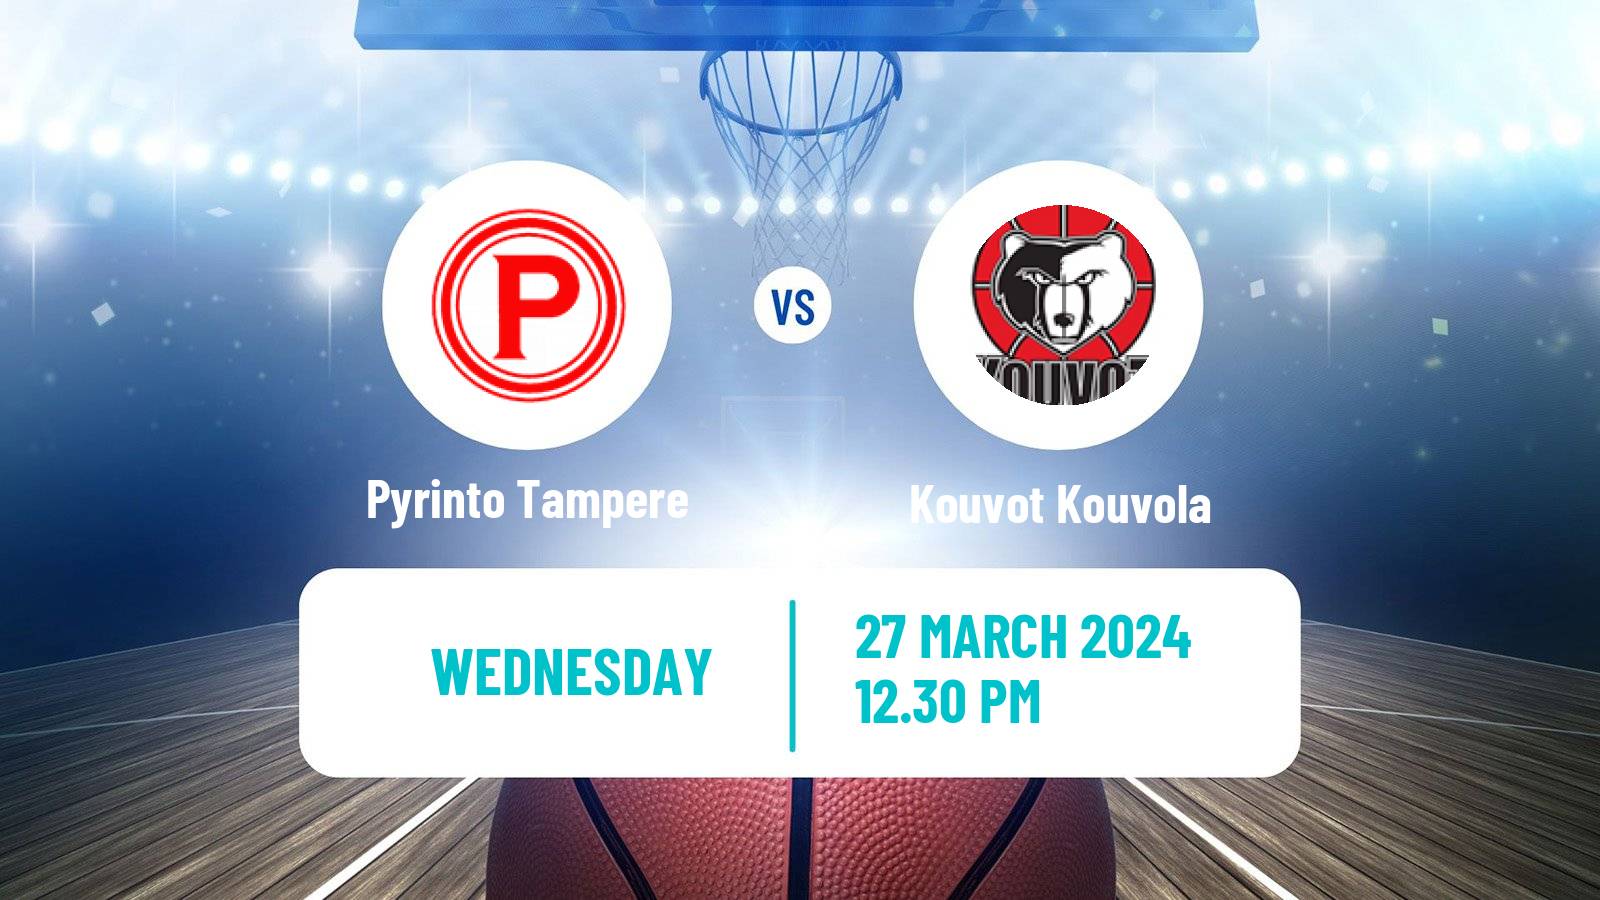 Basketball Finnish Korisliiga Pyrinto Tampere - Kouvot Kouvola